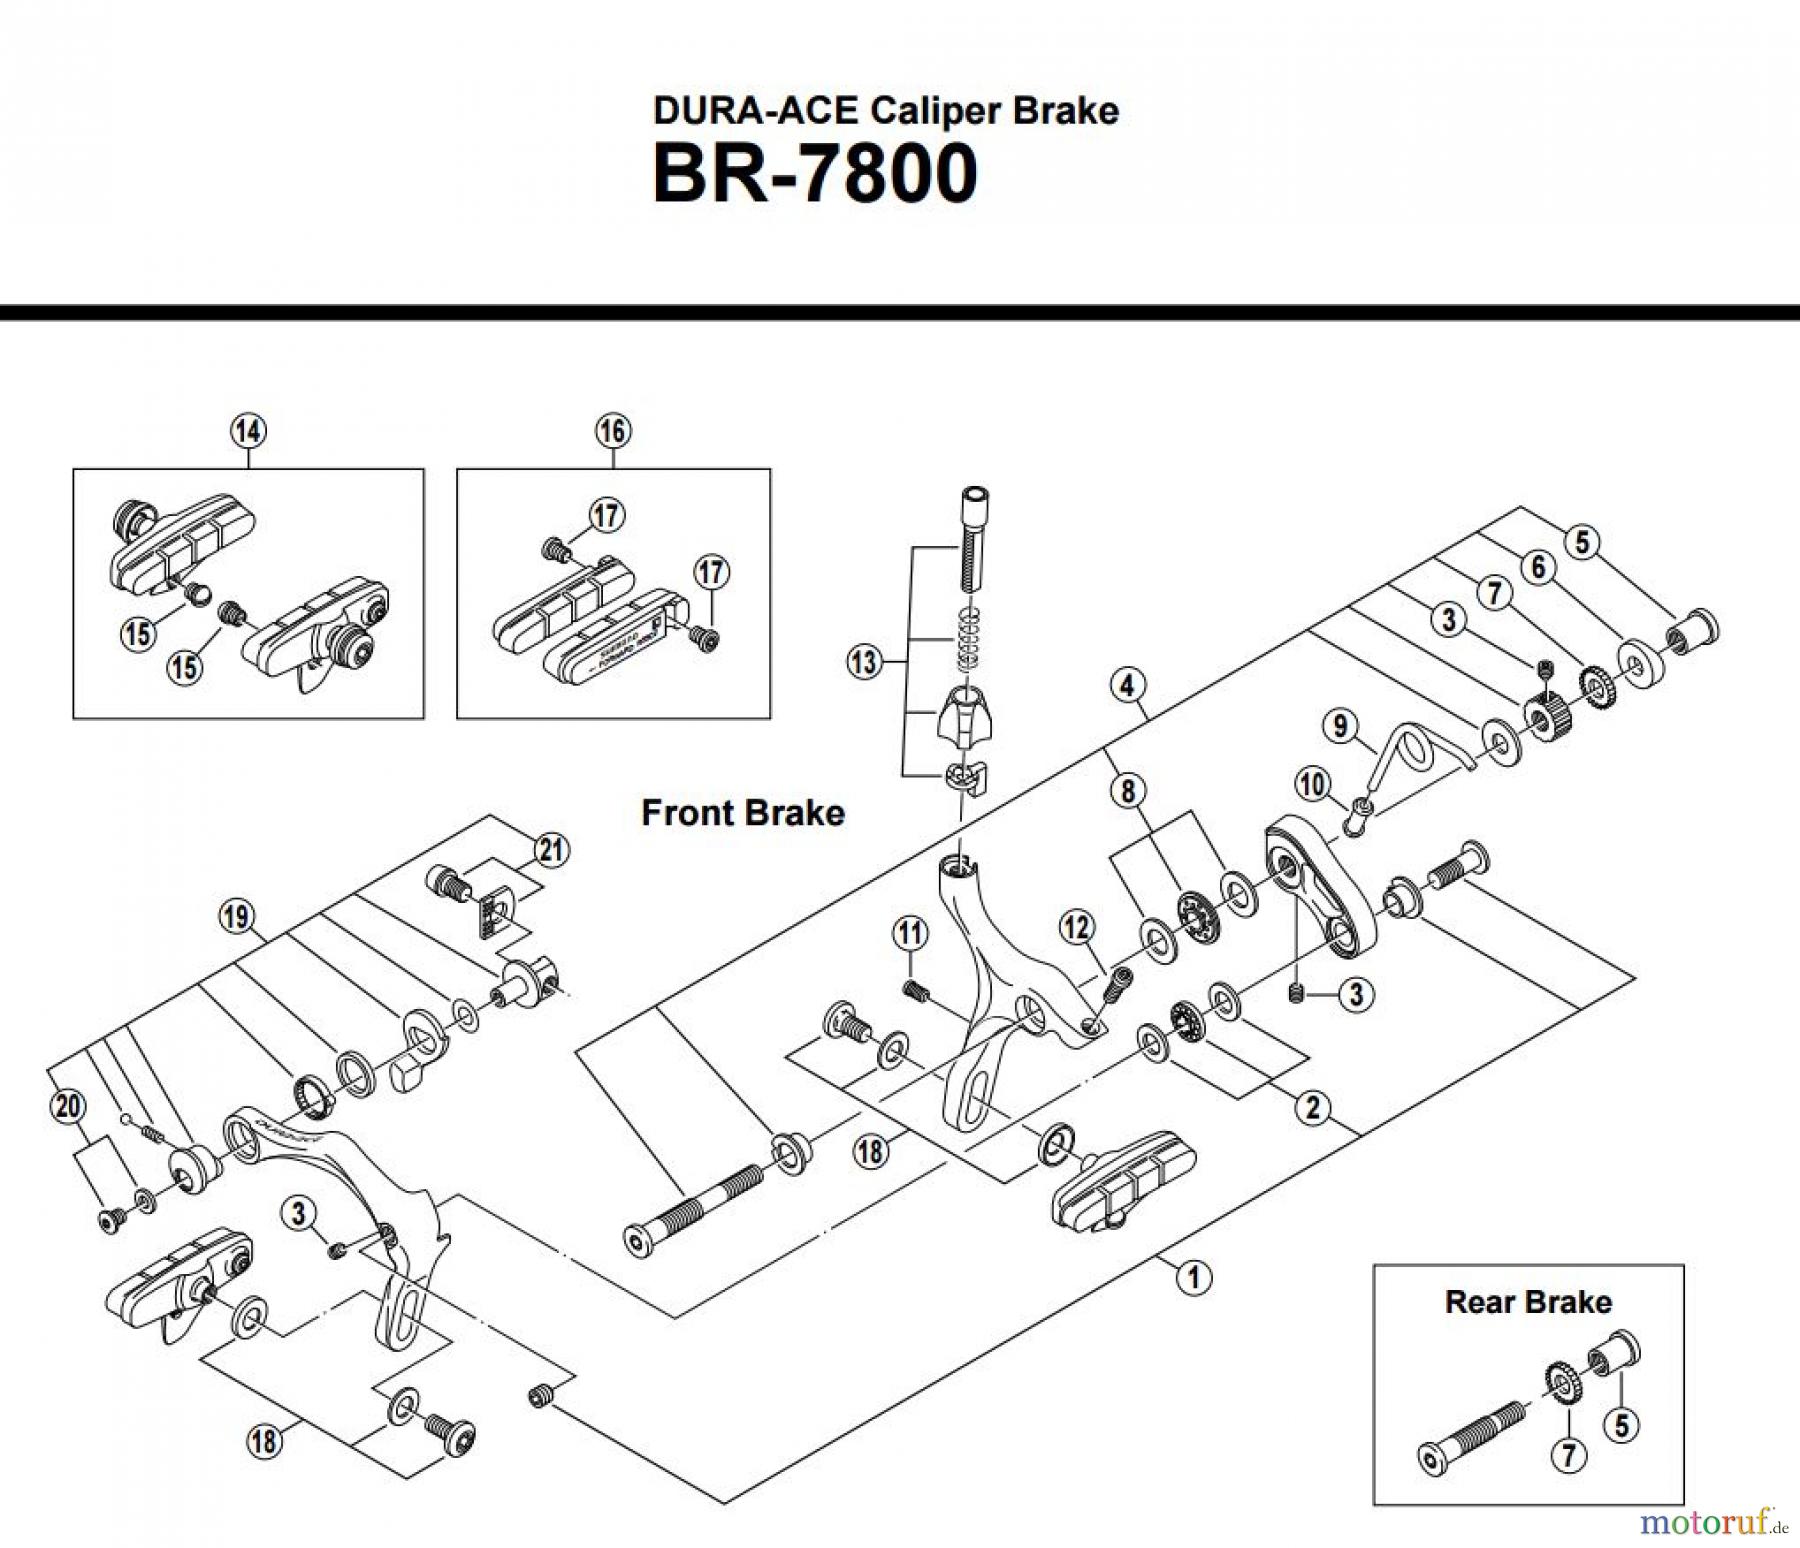  Shimano BR Brake - Bremse BR-7800 -2249A DURA-ACE Caliper Brake